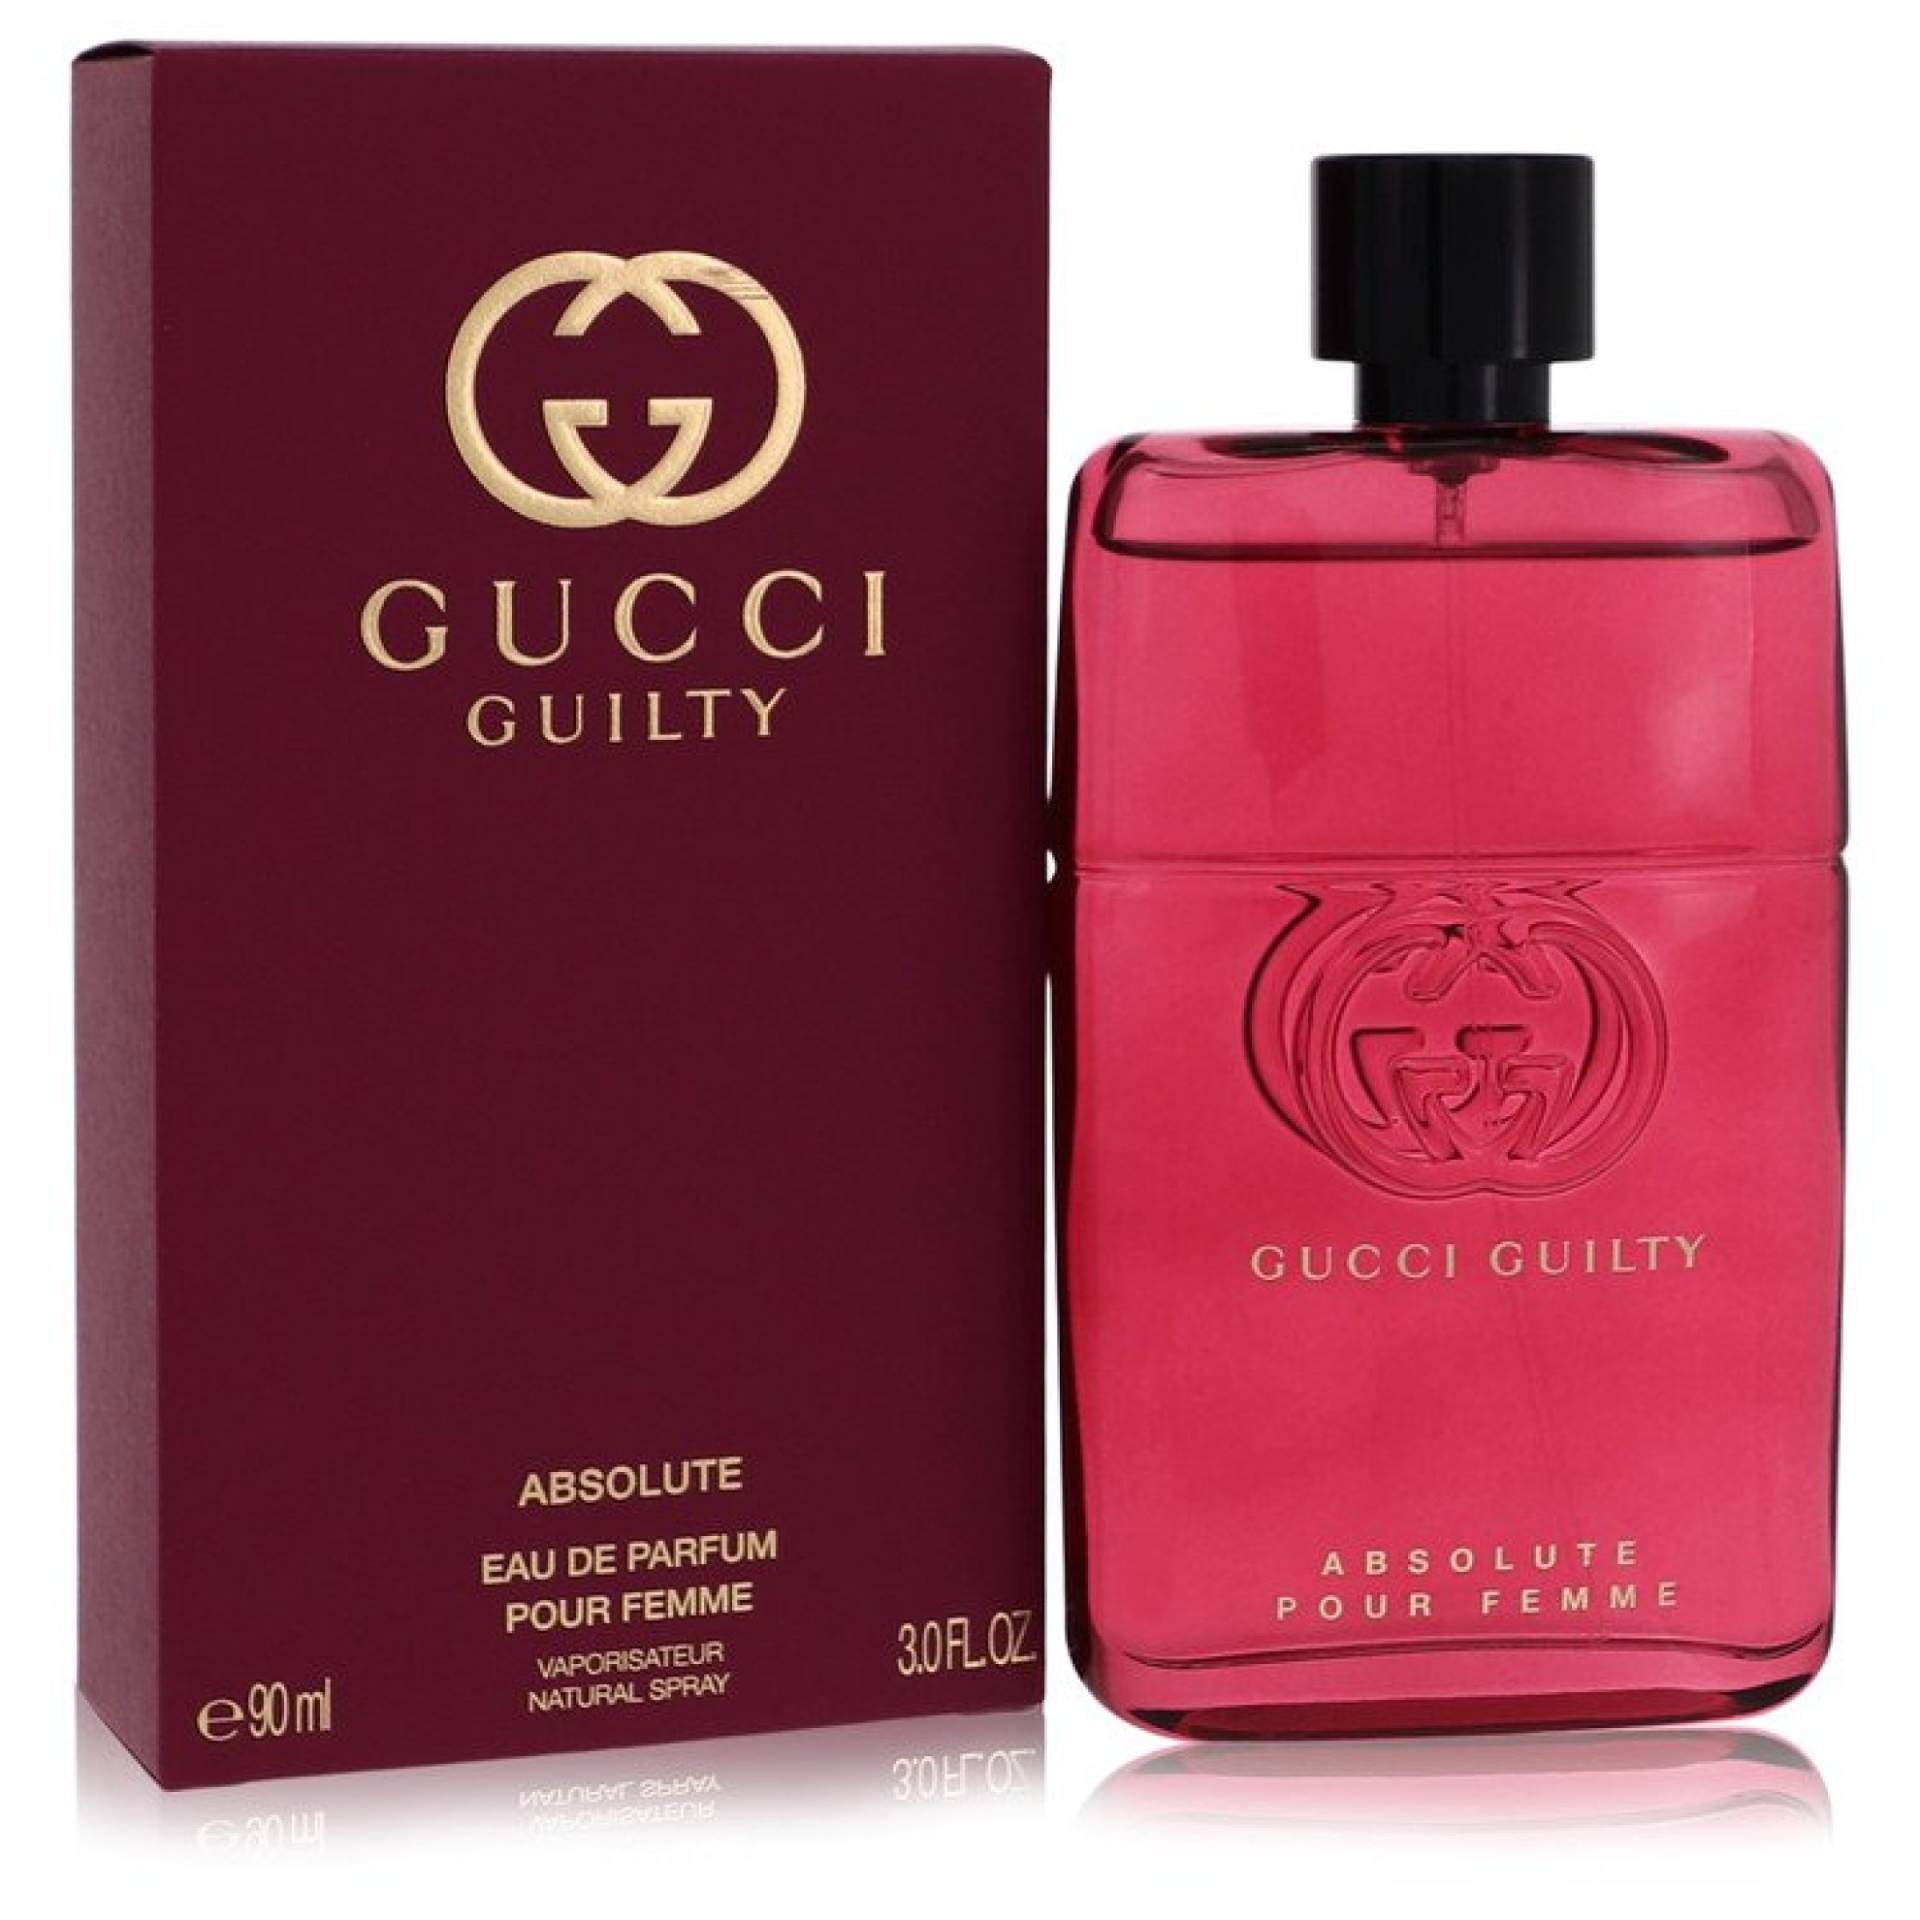 Gucci Guilty Absolute Eau De Parfum Spray 90 ml von Gucci